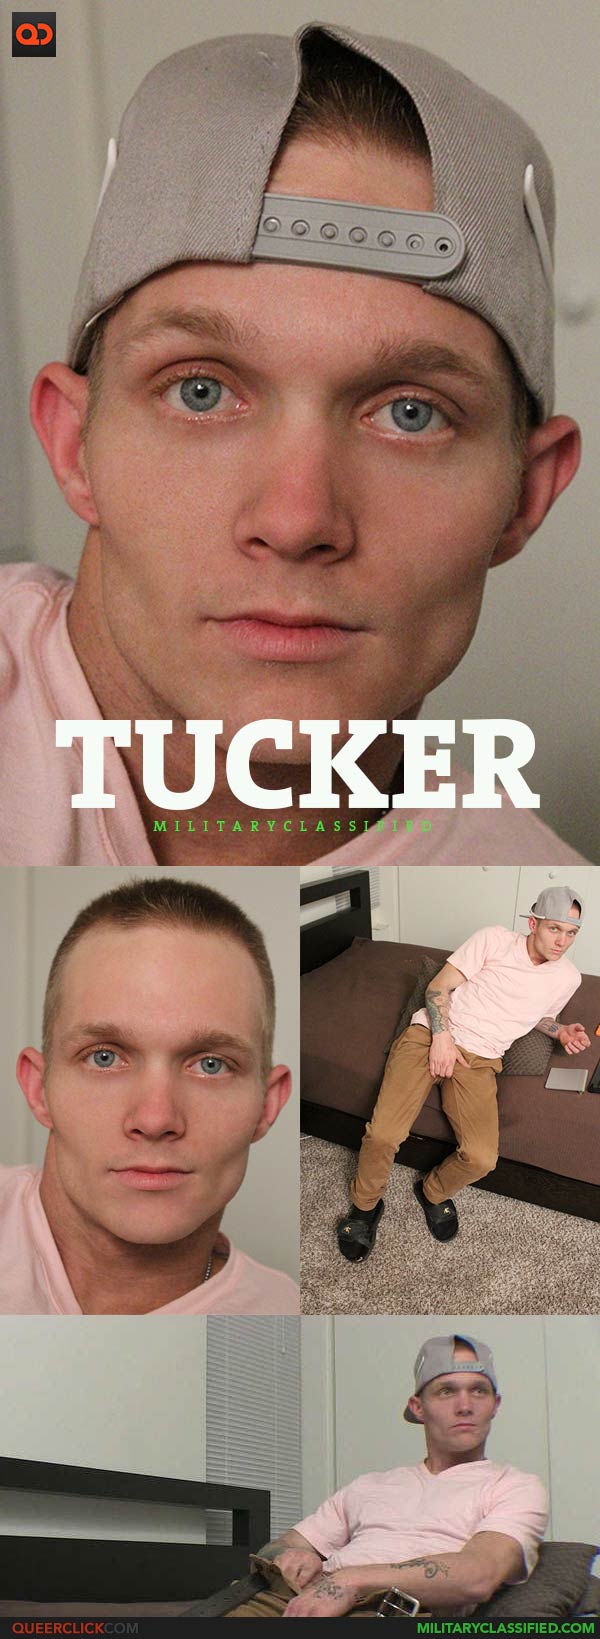 Military Classified: Tucker